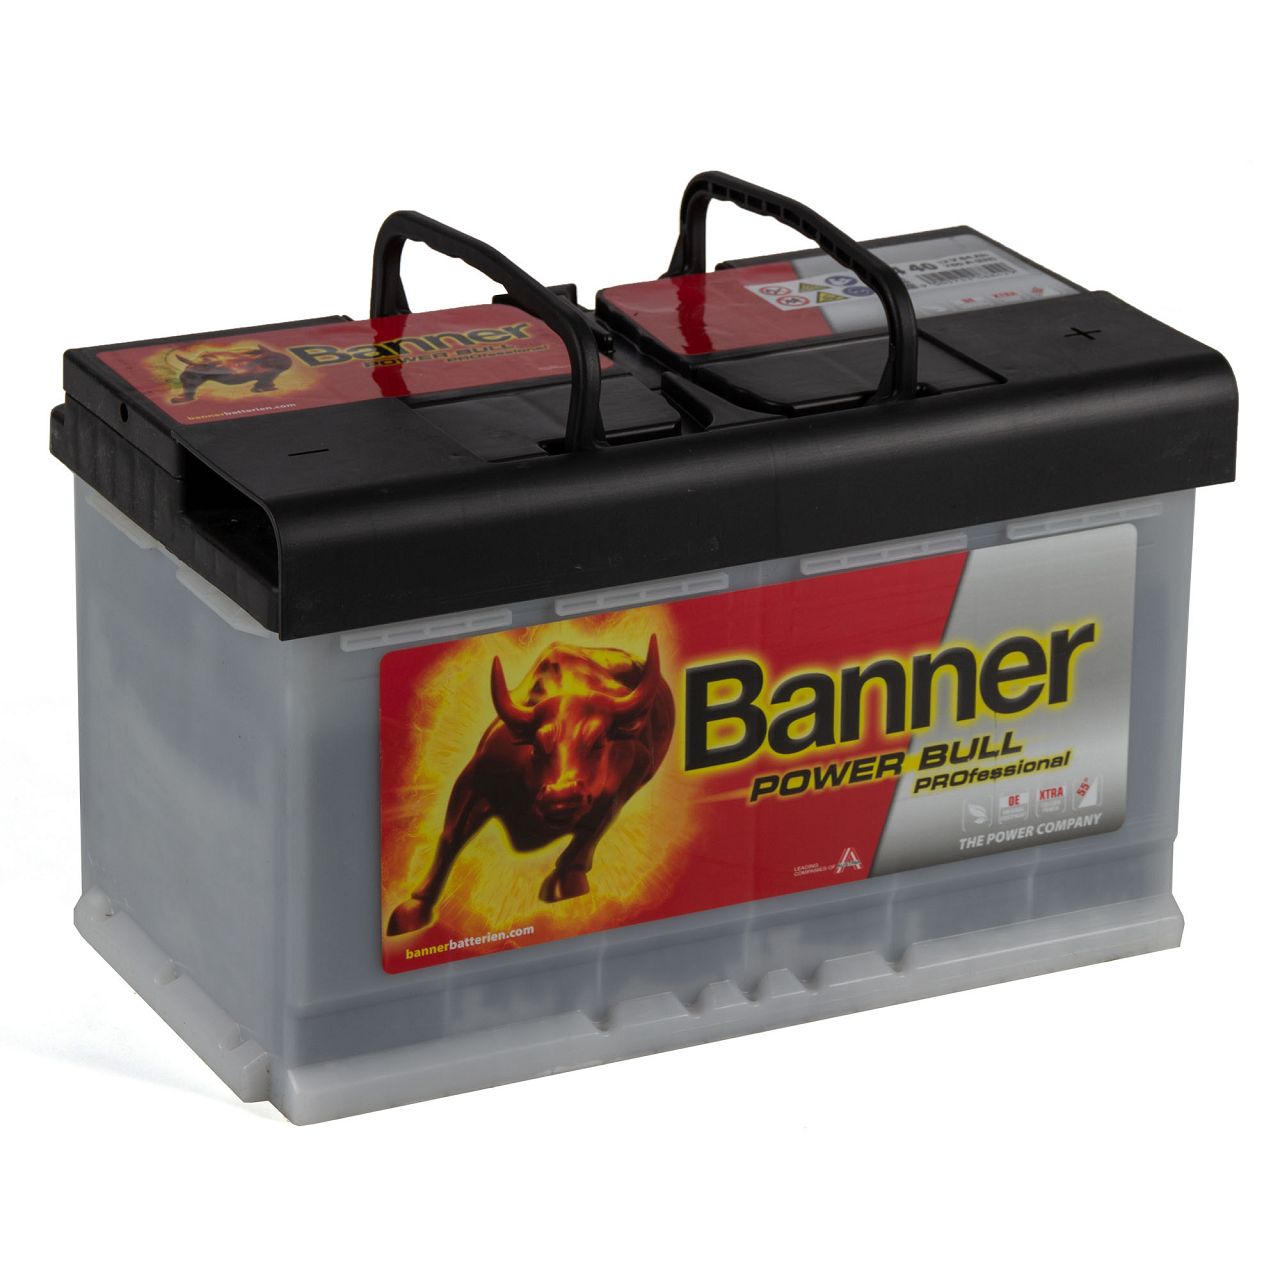 BANNER PROP8440 PRO P8440 Power Bull Professional Autobatterie Batterie 12V 84Ah